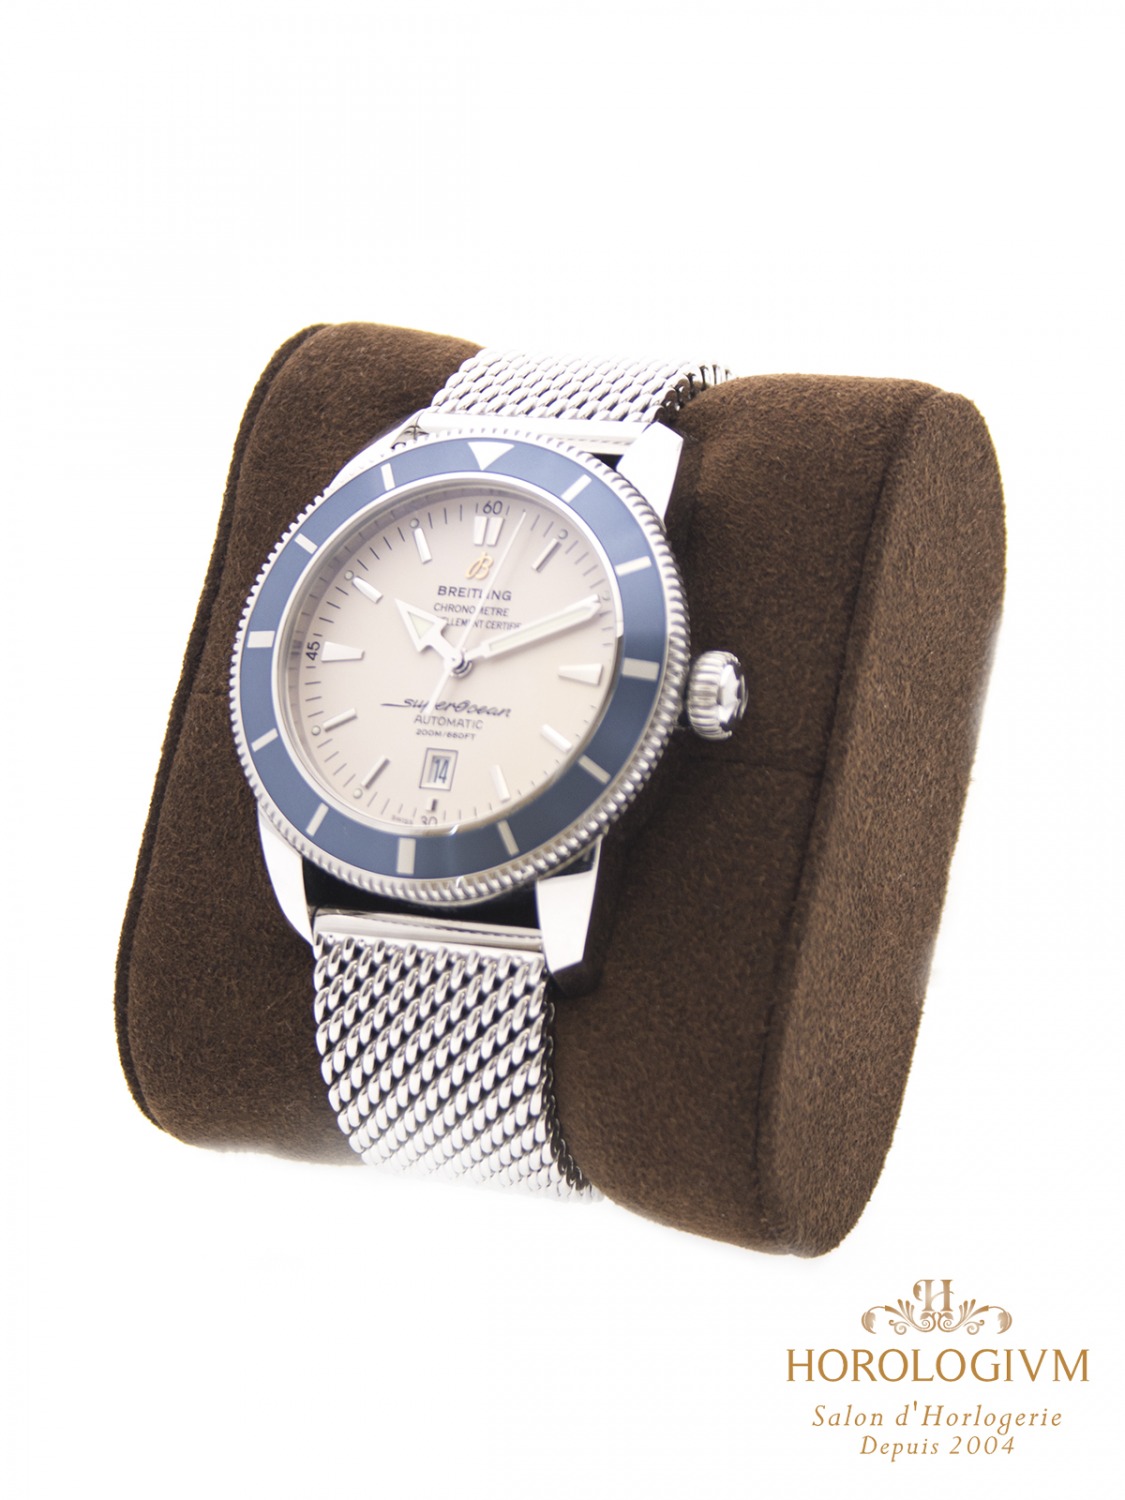 Breitling Superocean Heritage Date 46 MM watch, silver